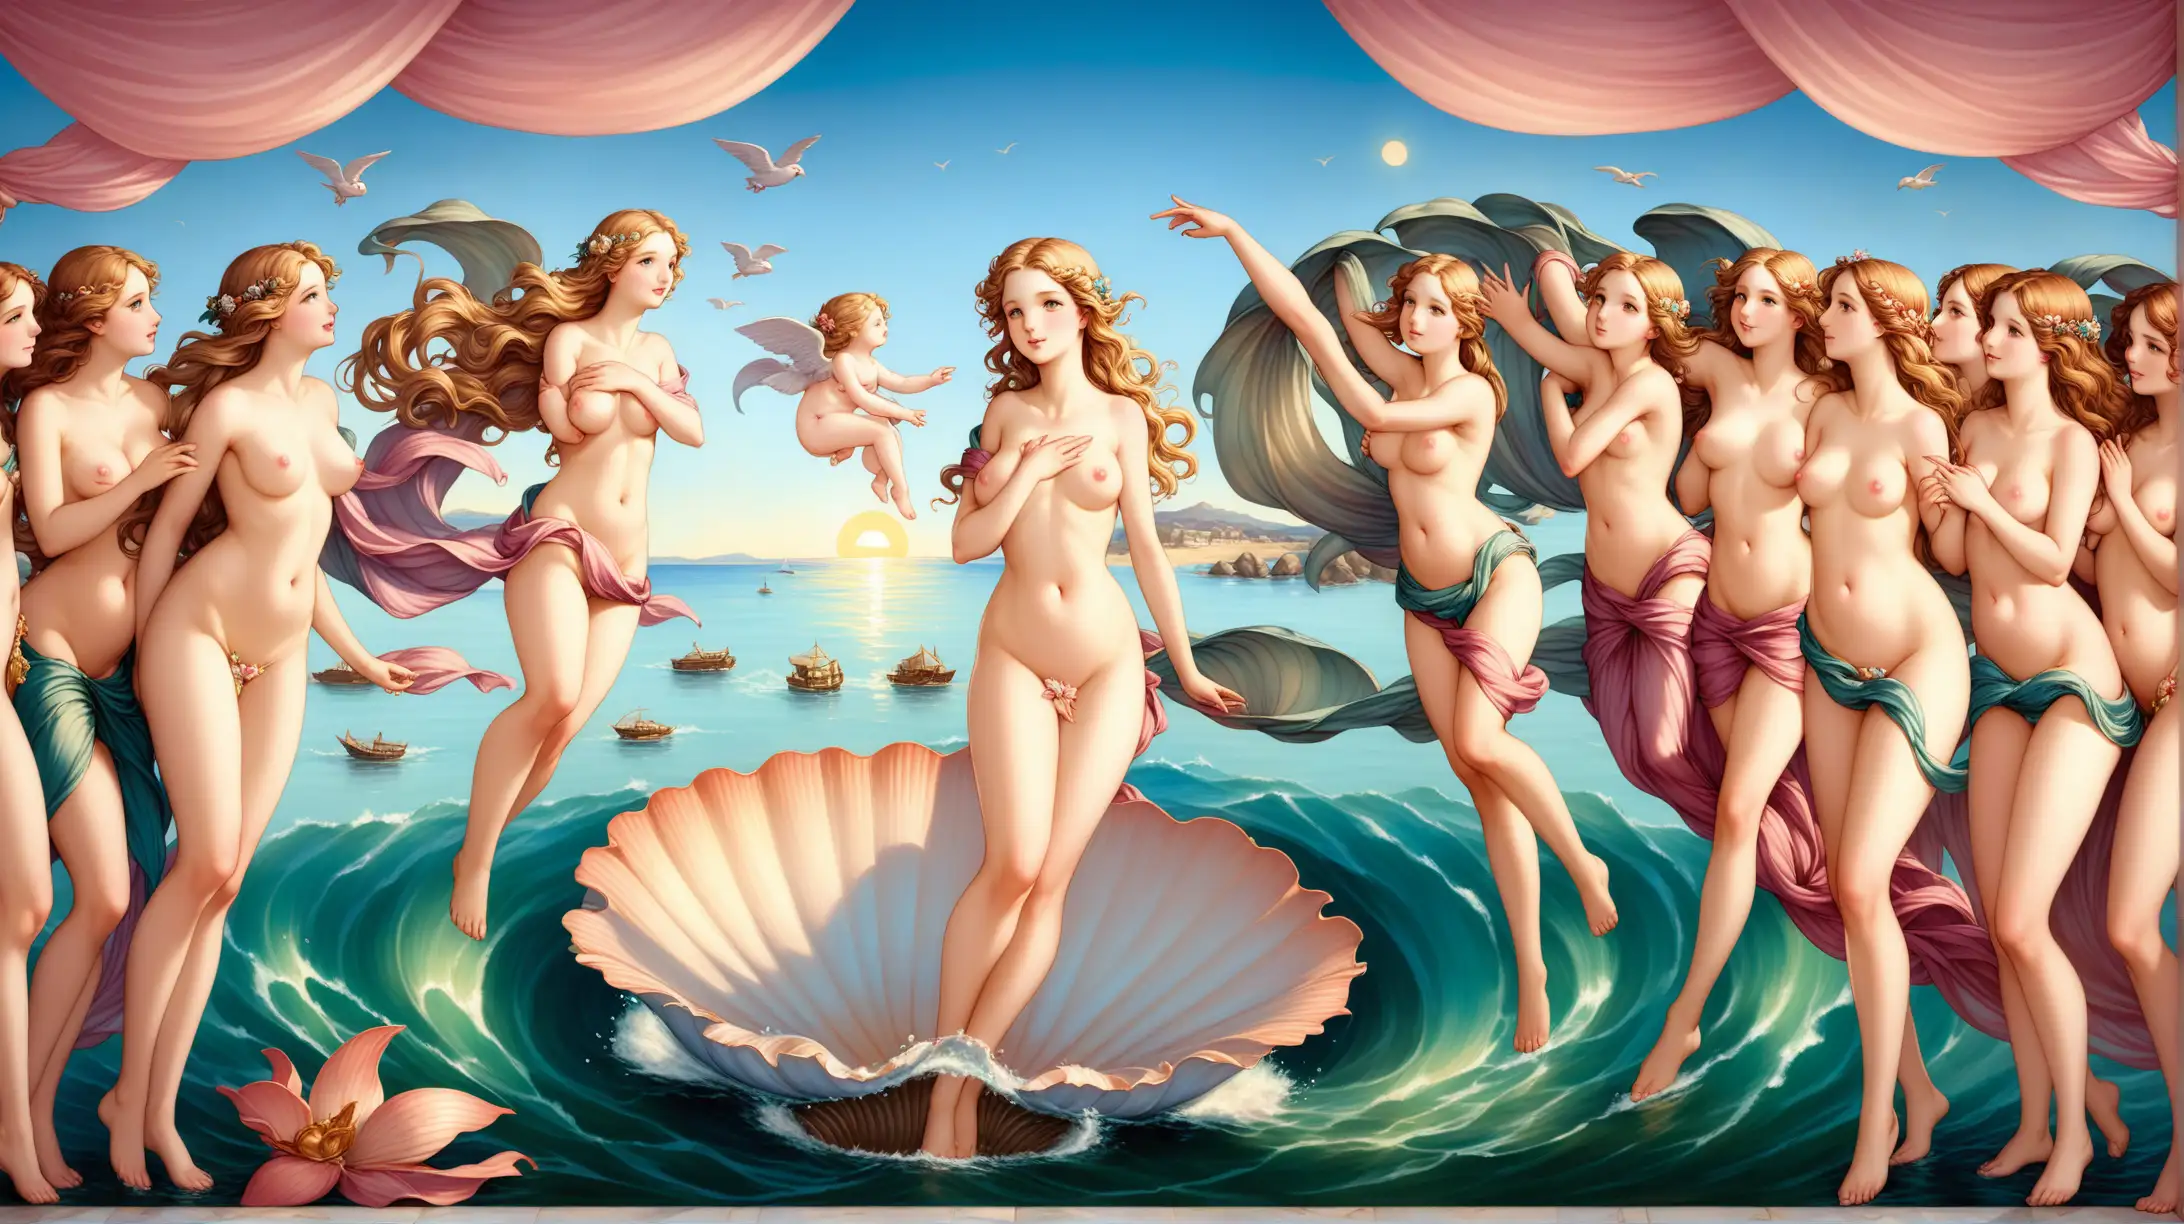 Classic Renaissance Artwork The Birth of Venus Depicted in Full